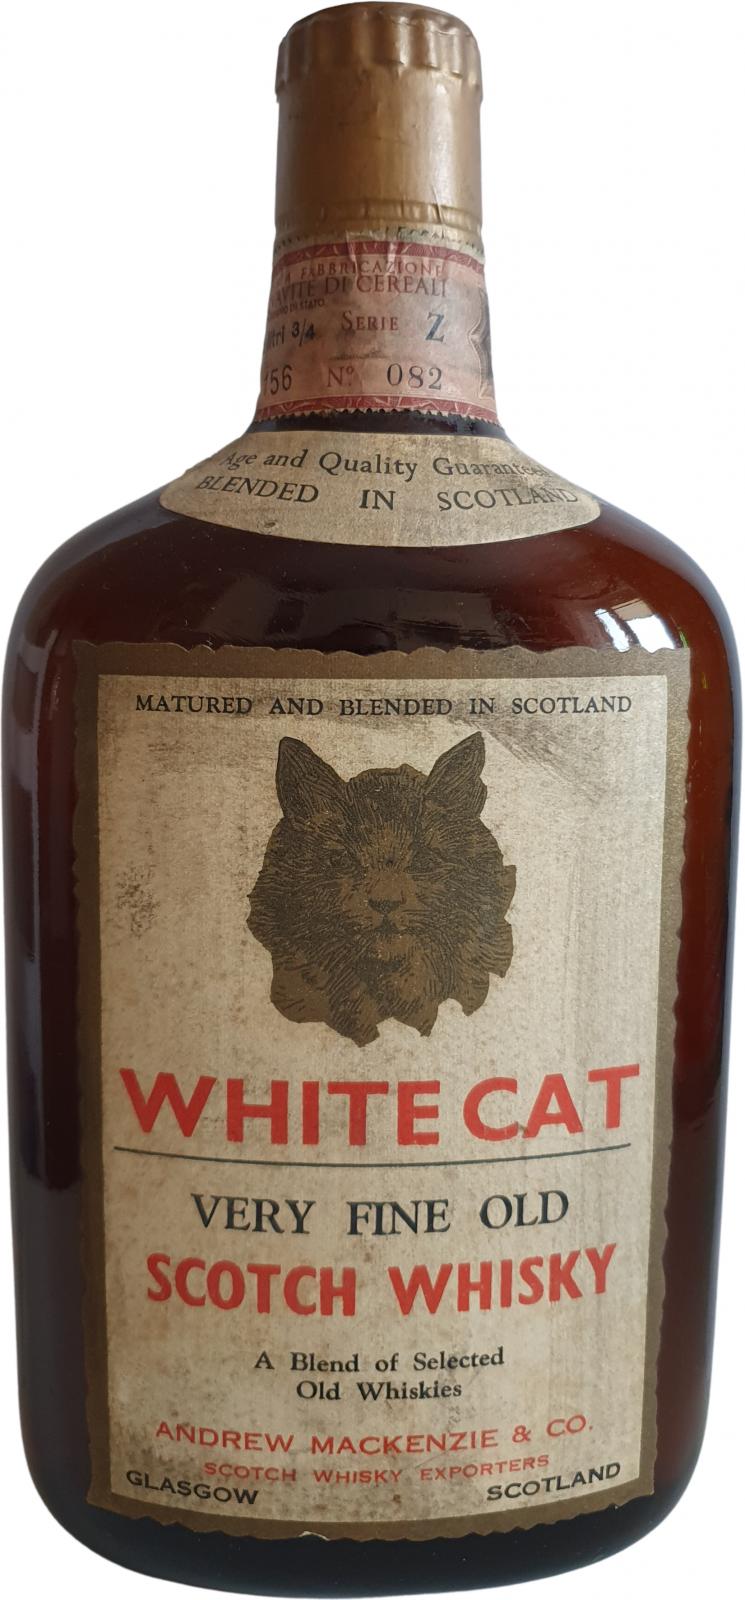 White Cat Very fine old Scotch Whisky